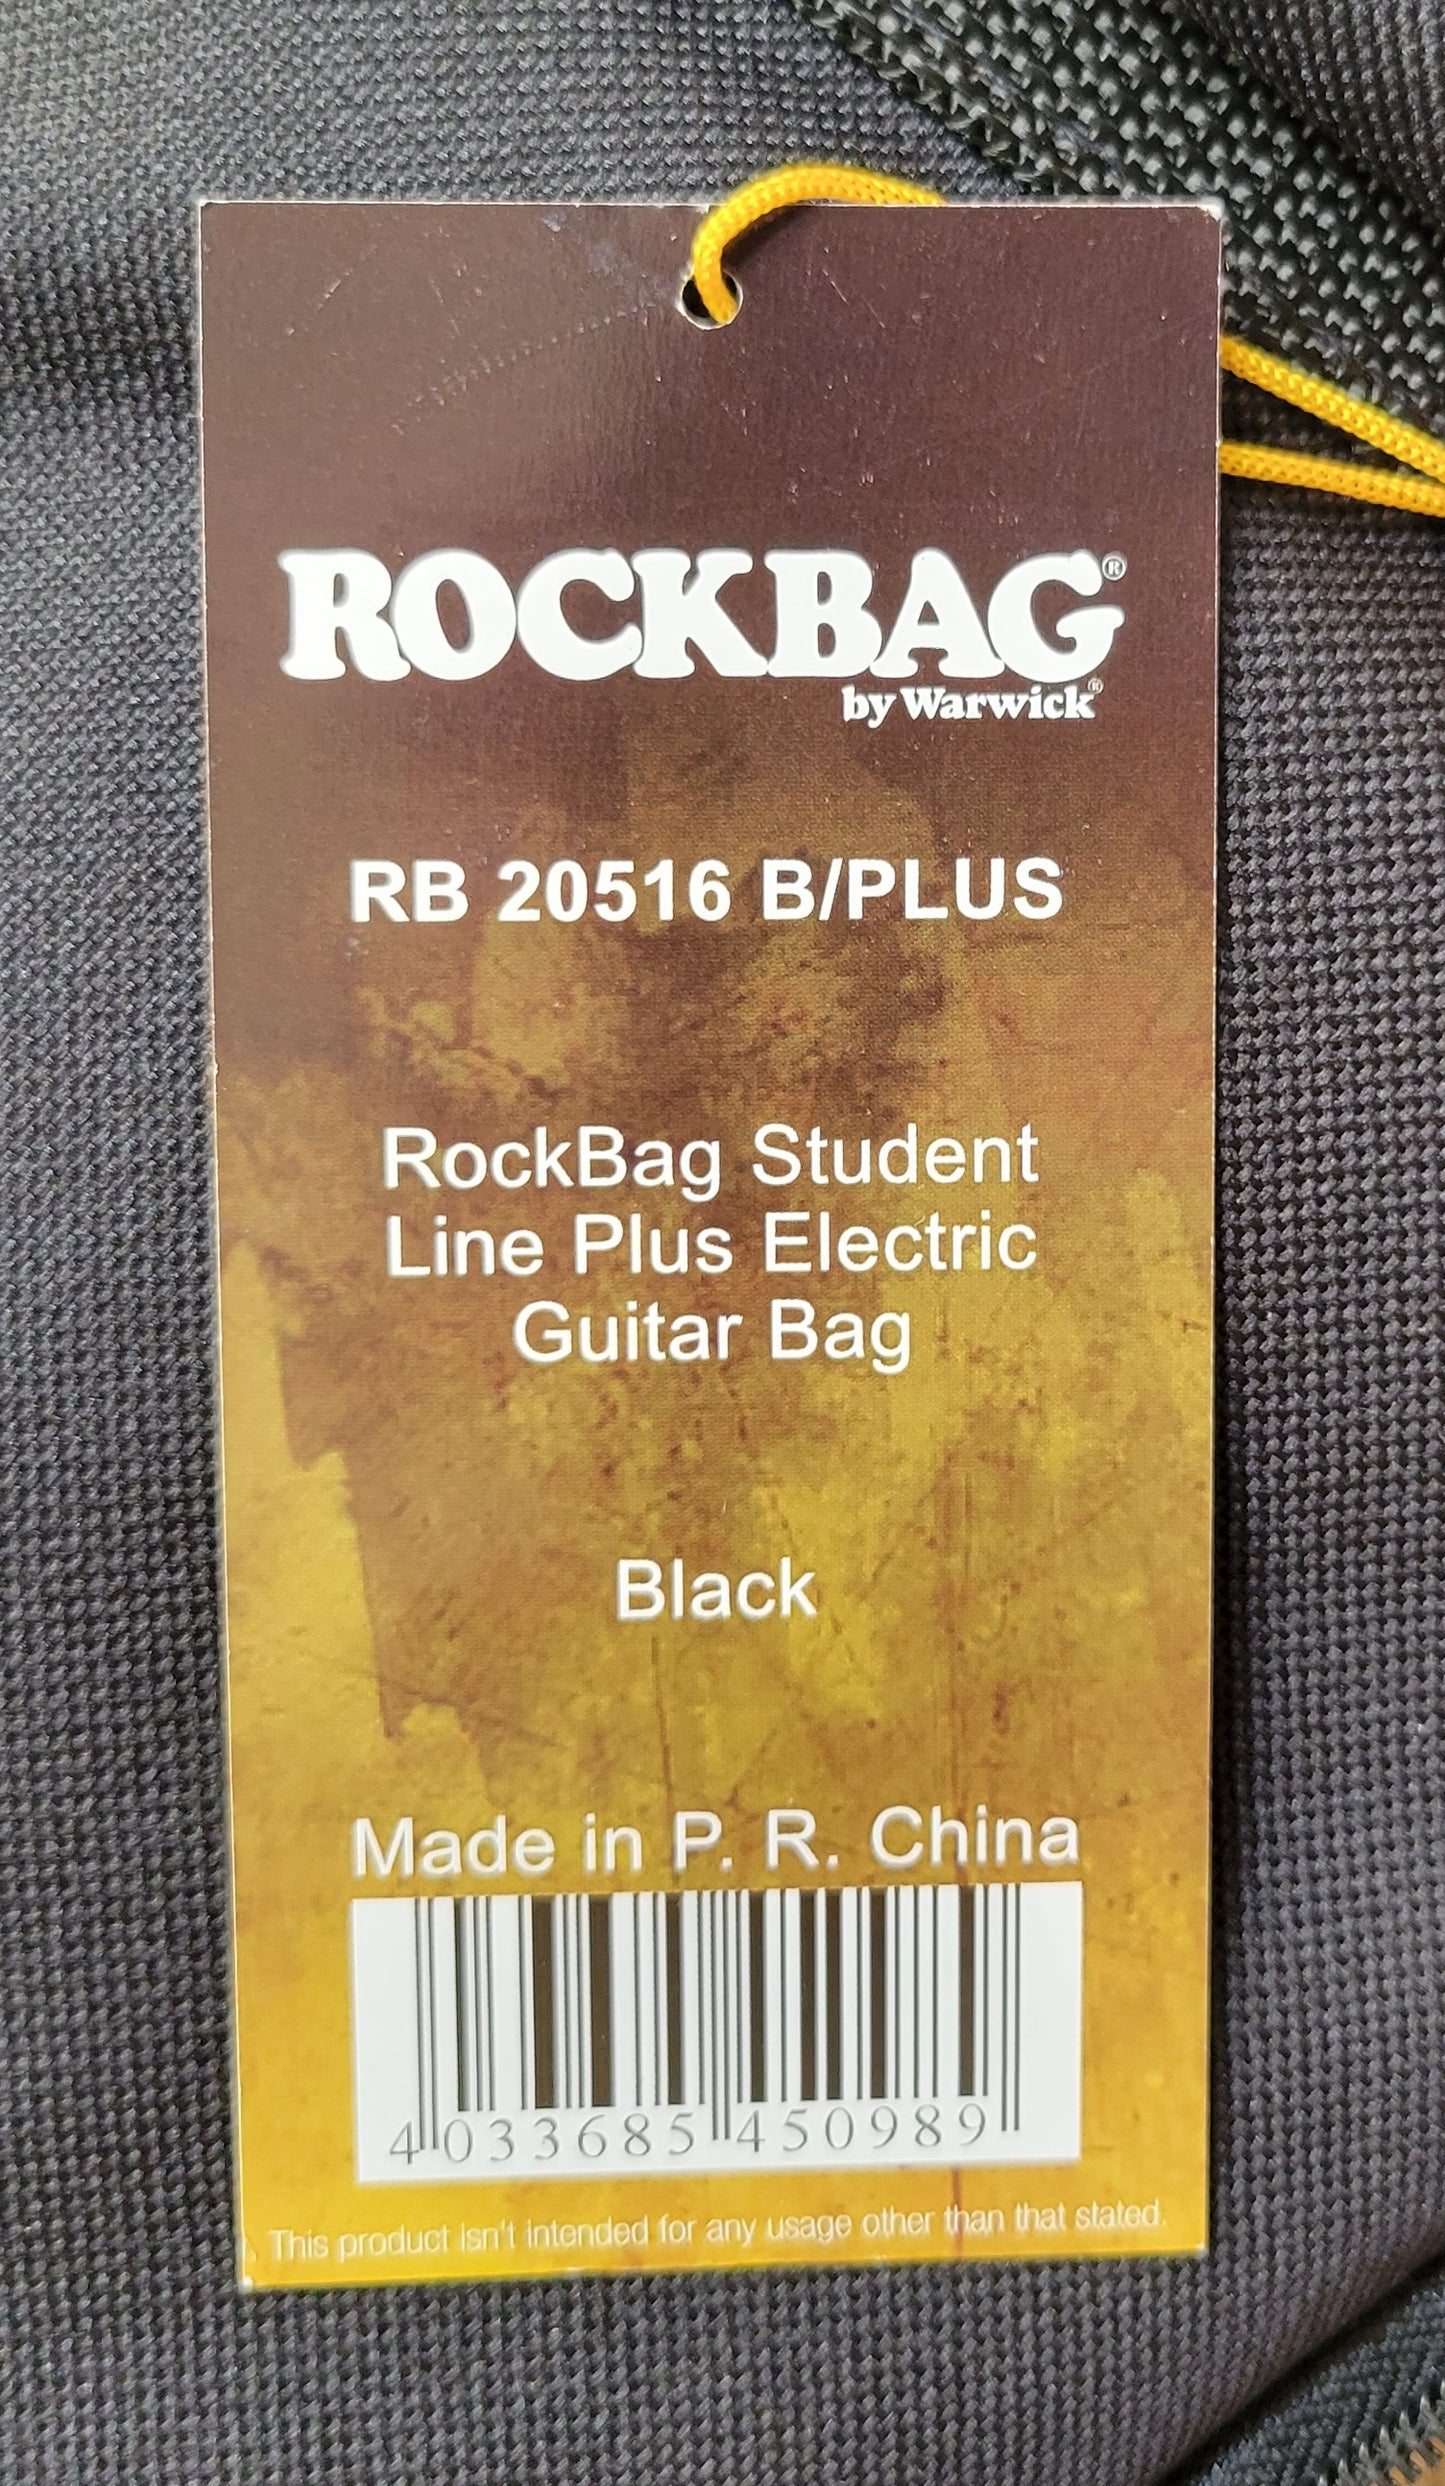 Framus D-Series Panthera Supreme Electric Guitar, Nirvana Black Transparent High Polish, New Gig Bag